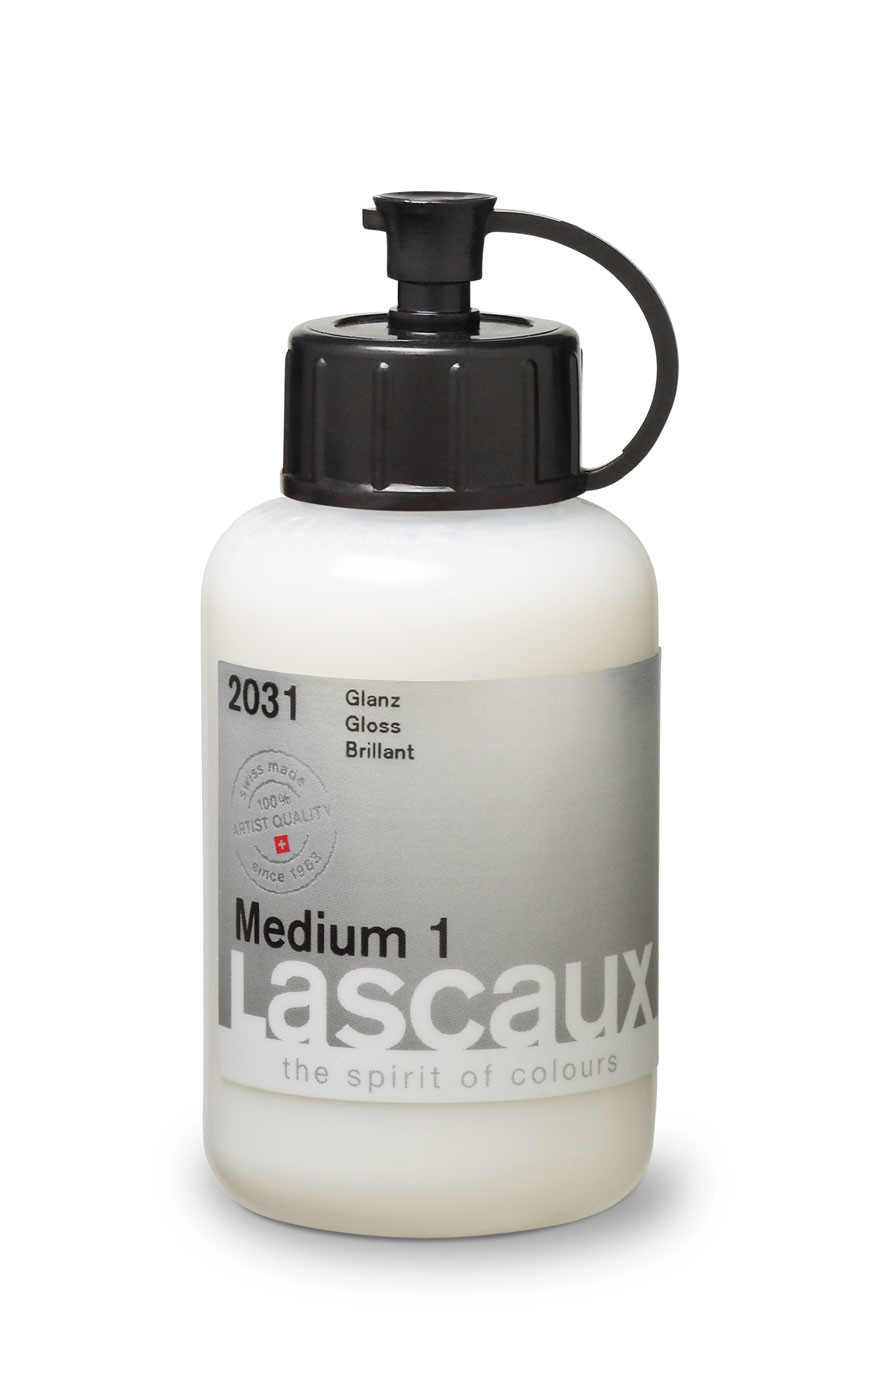 Lascaux gloss medium